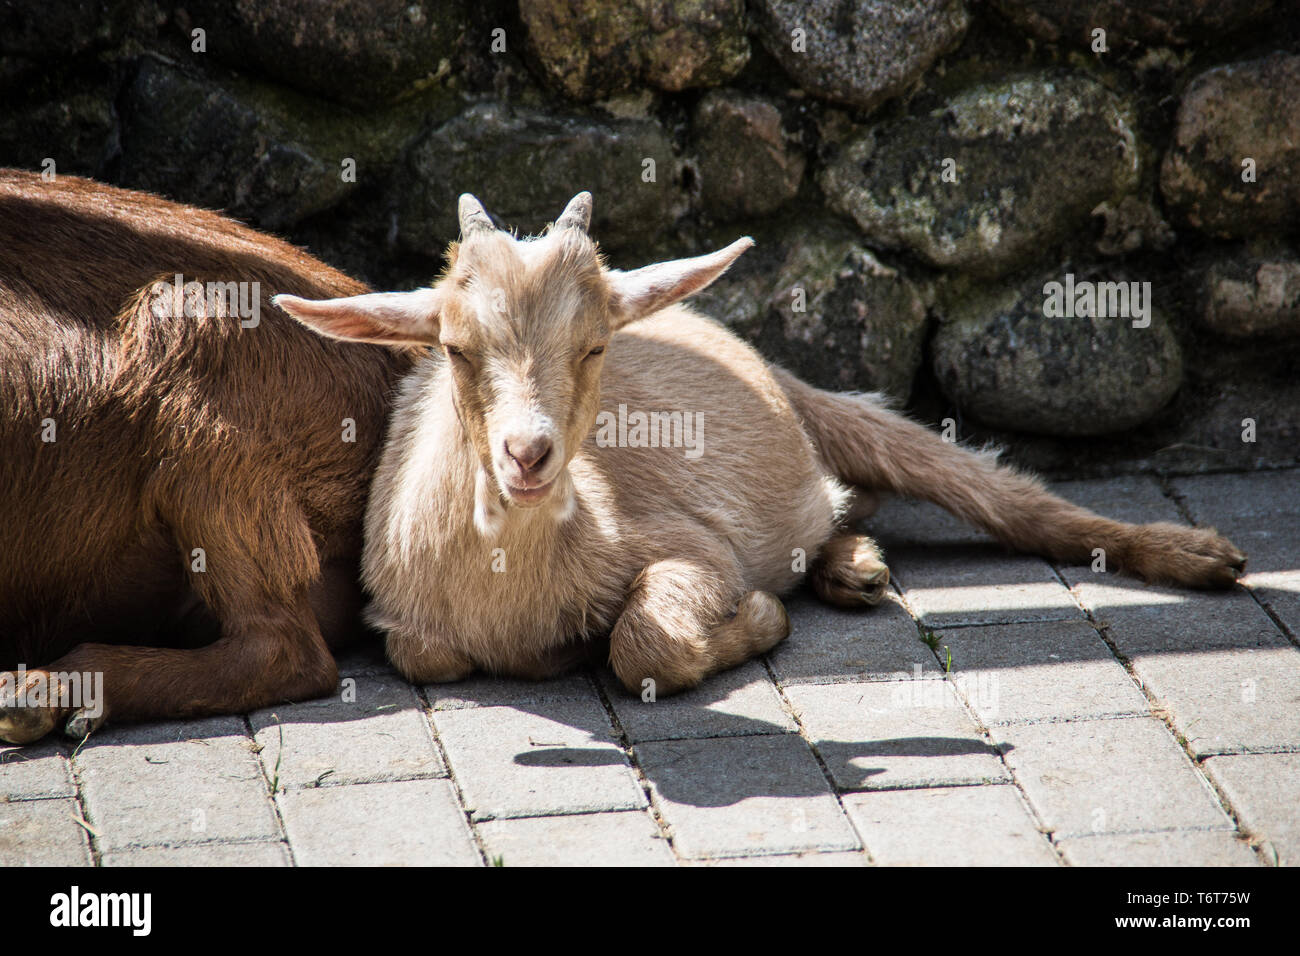 Goat basking in the sun Stock Photo